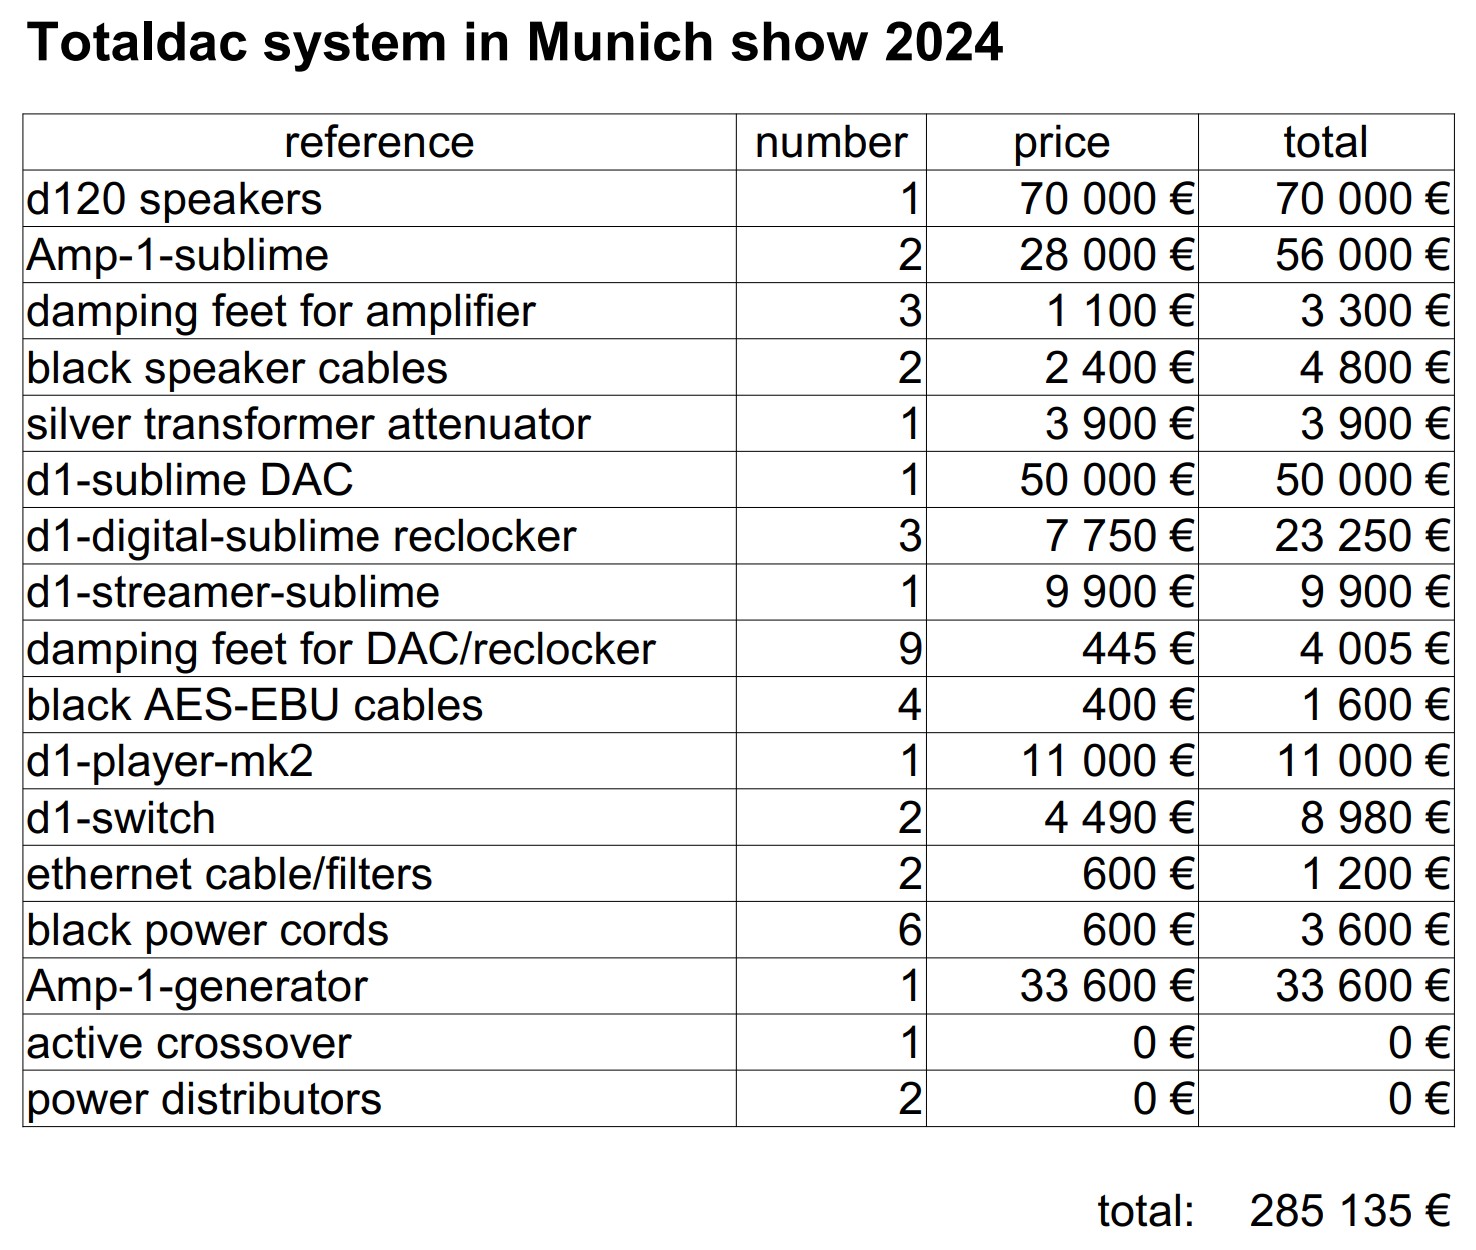 Totaldac system for Munich 2024